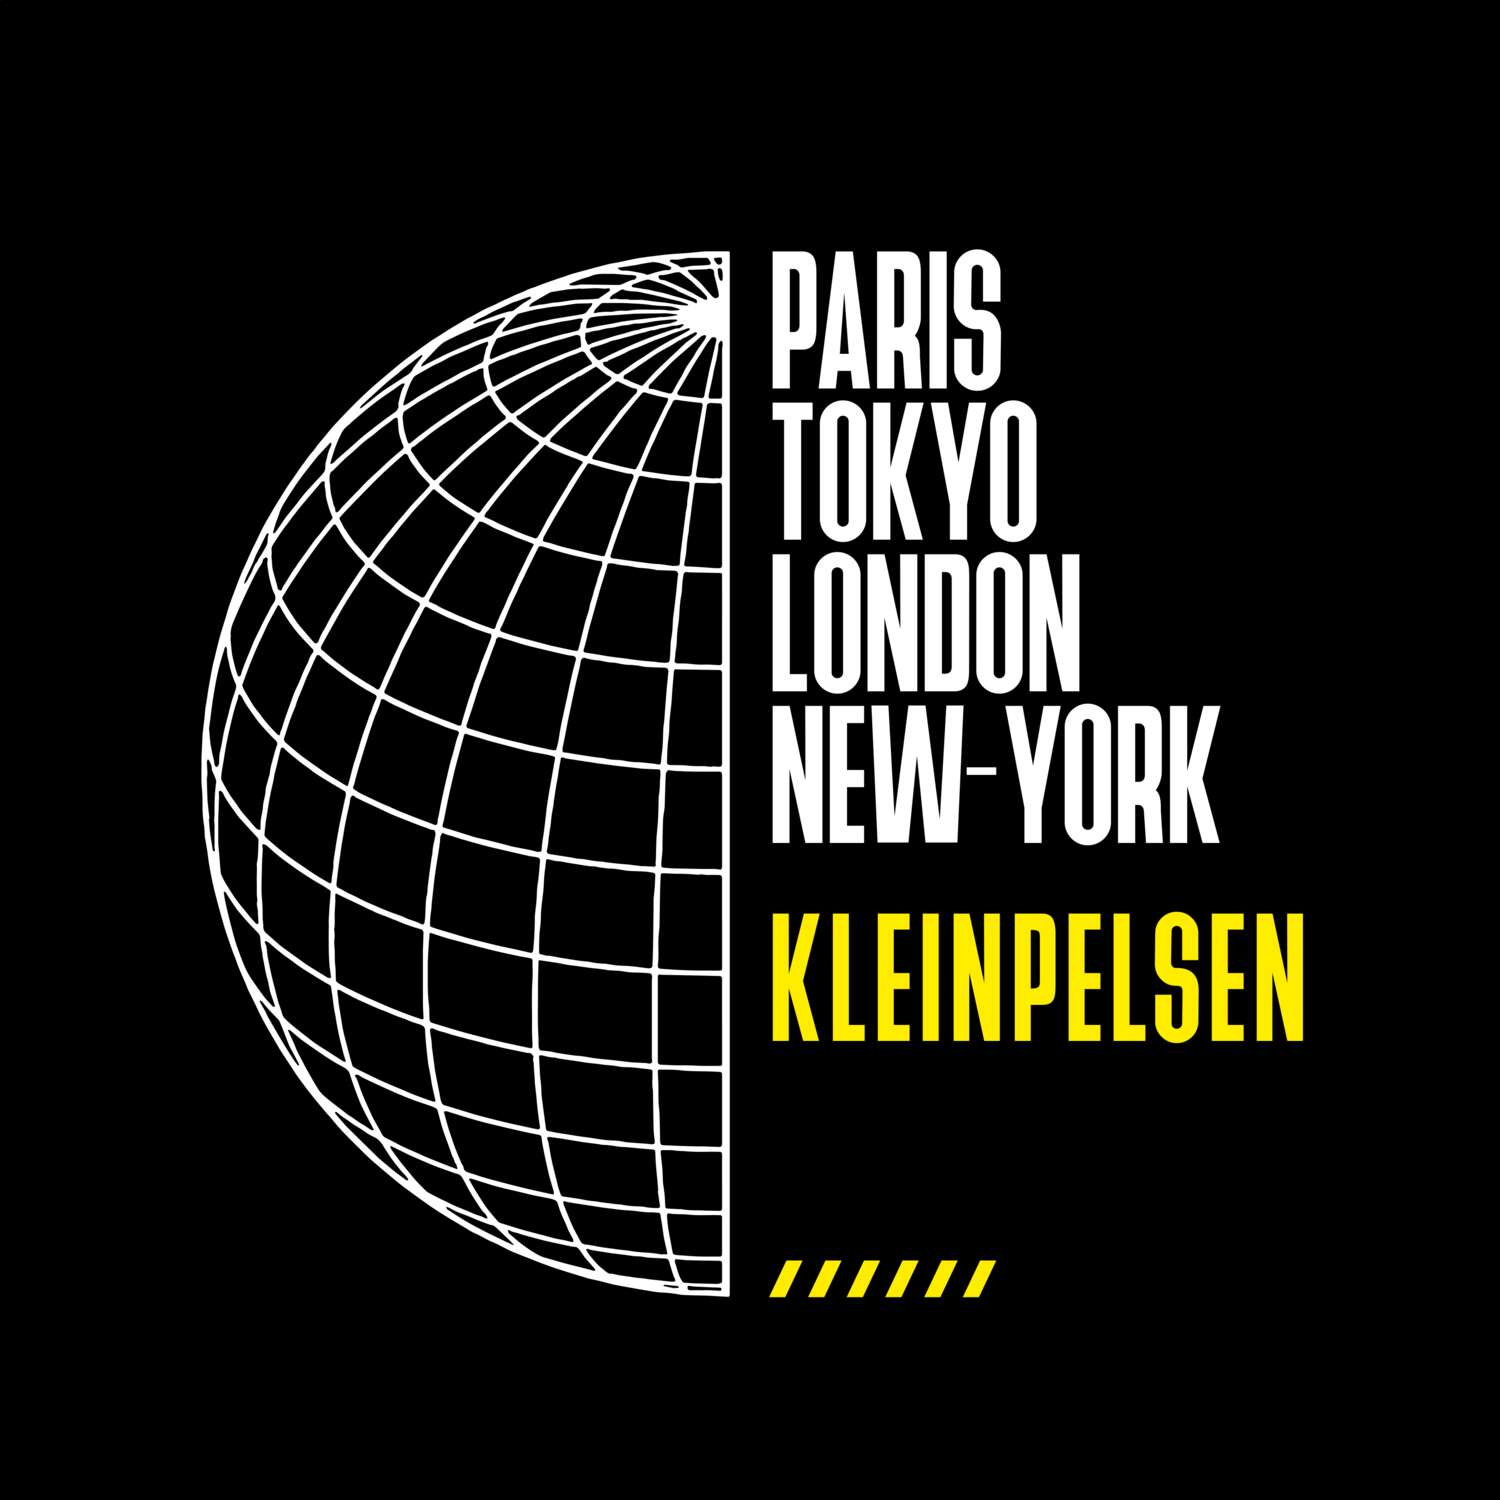 Kleinpelsen T-Shirt »Paris Tokyo London«